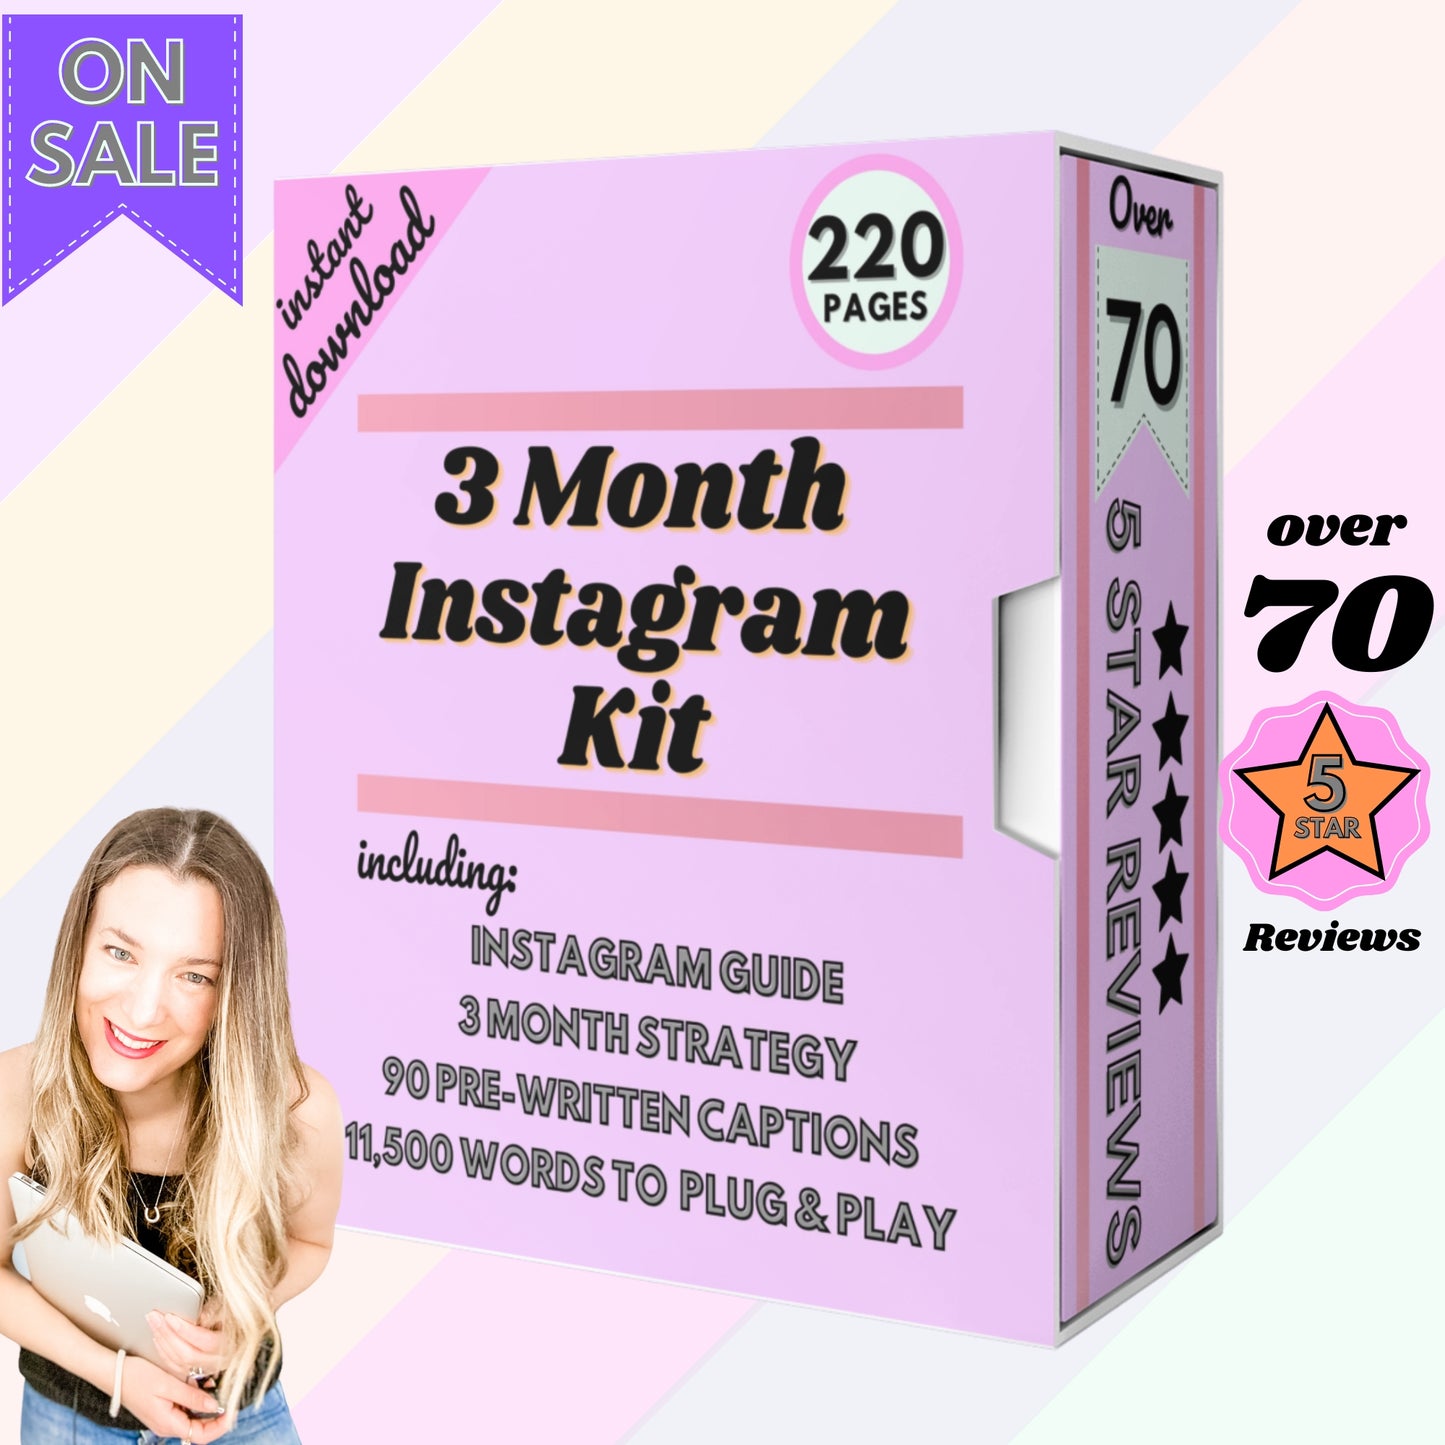 3 Month Instagram Kit - Instant download